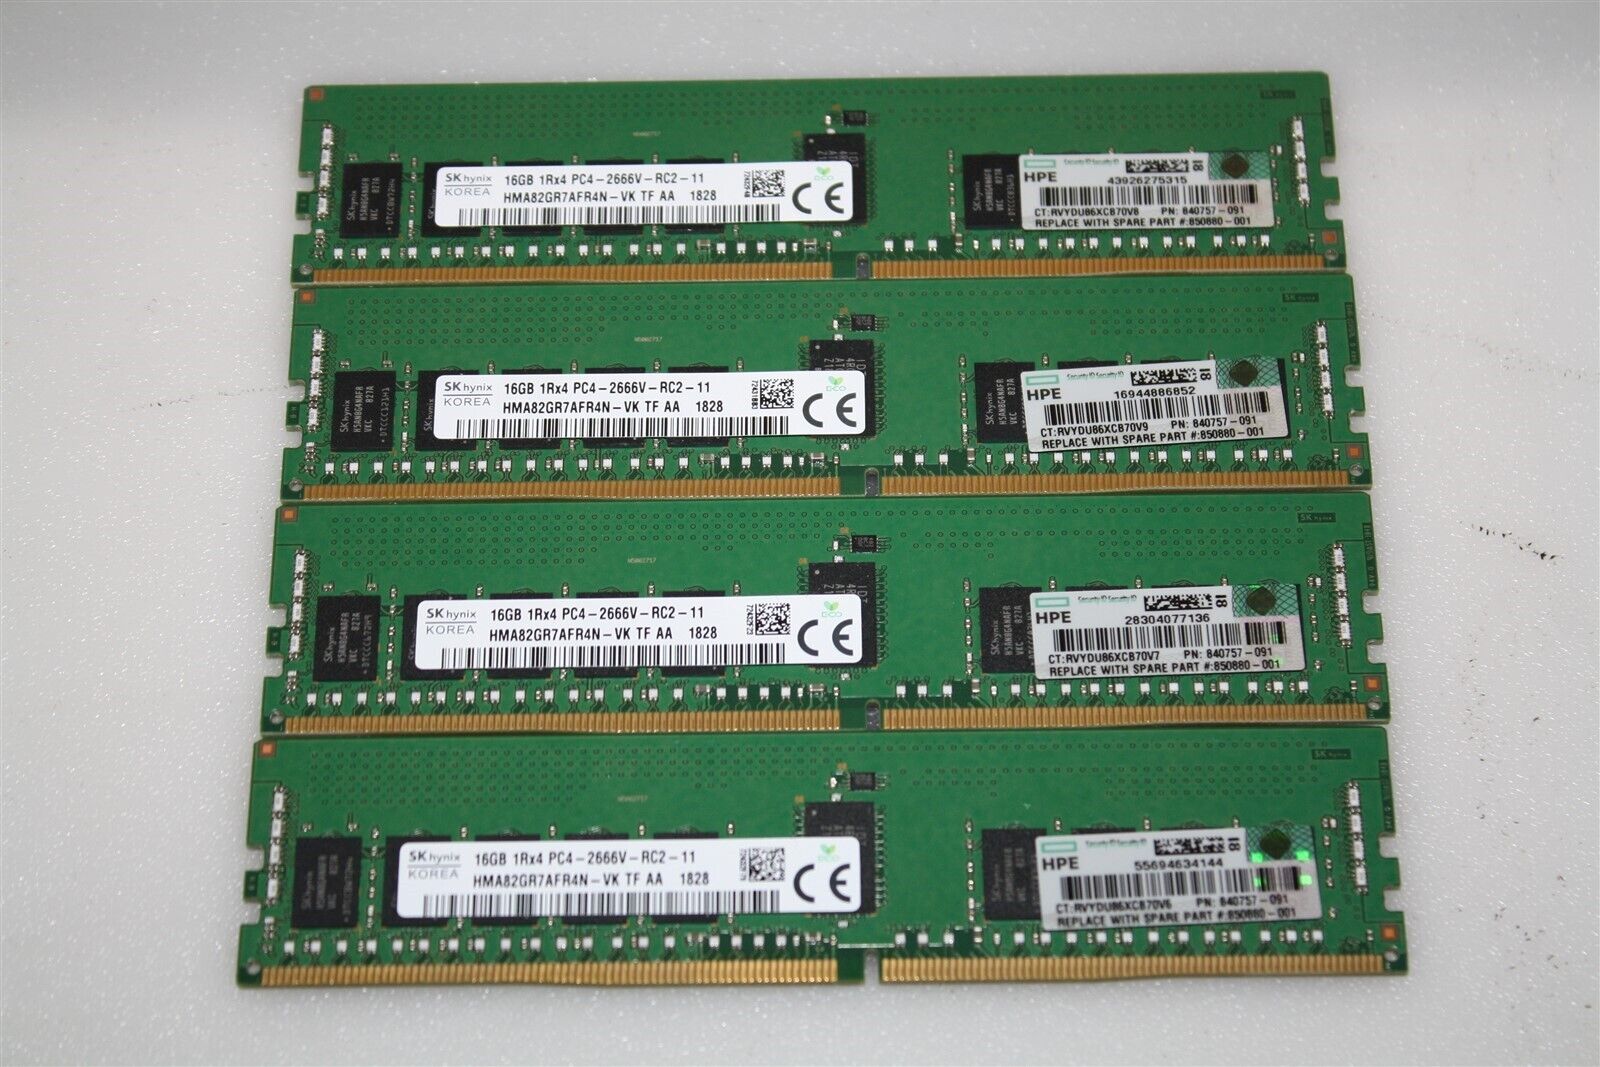 Lot of Four DDR4 Server RAM: SK Hynix 16GB 1Rx4 PC4-2666V-RC2-11 (1828) / TESTED